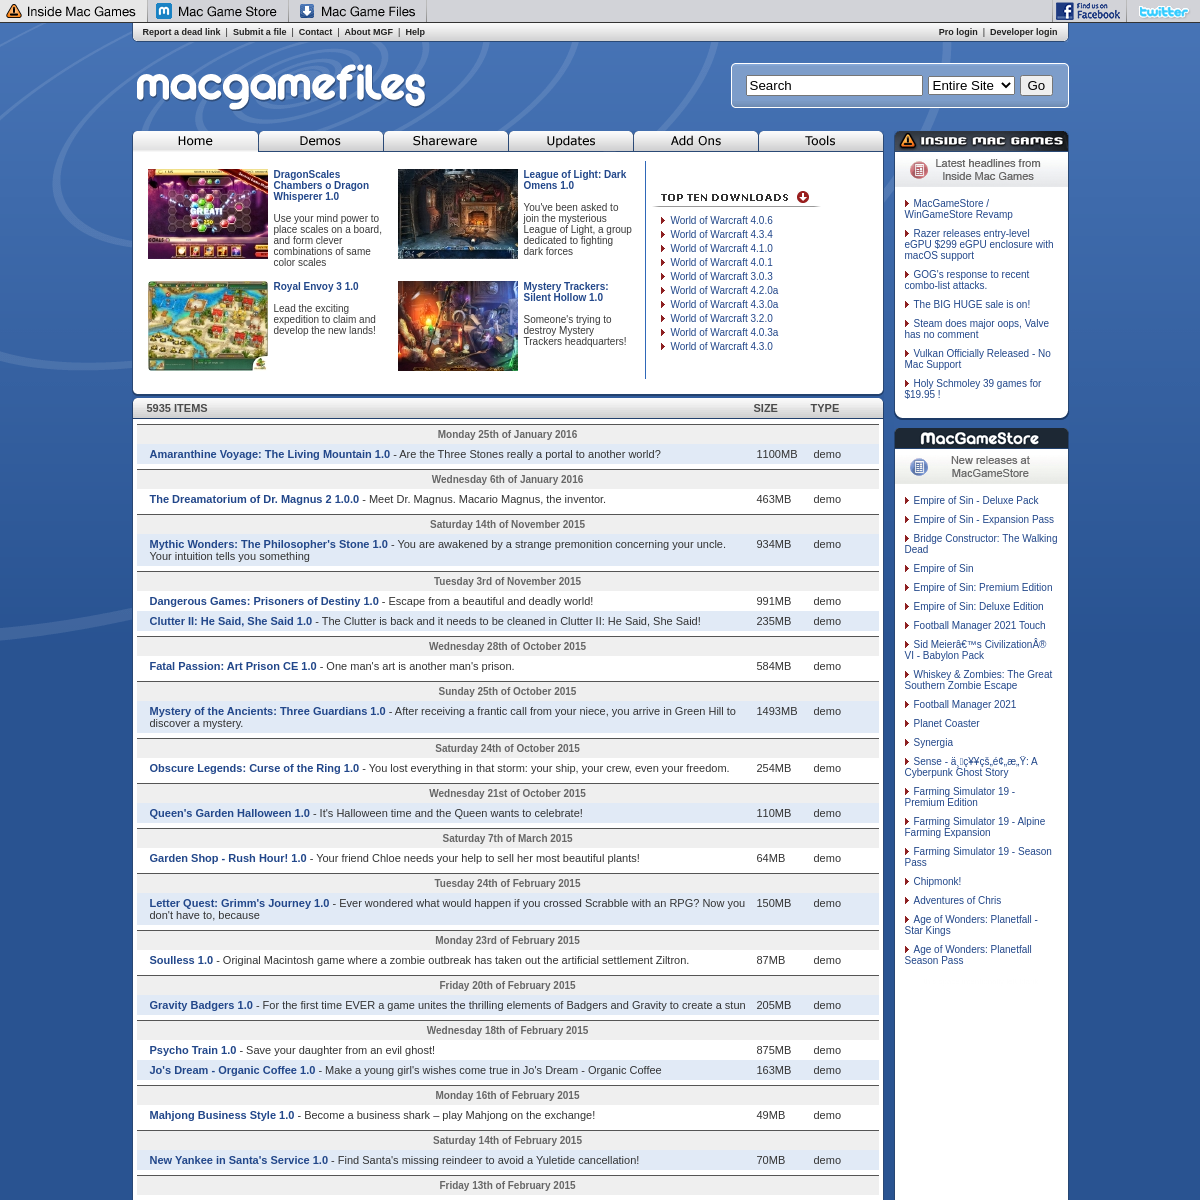 A complete backup of macgamefiles.com